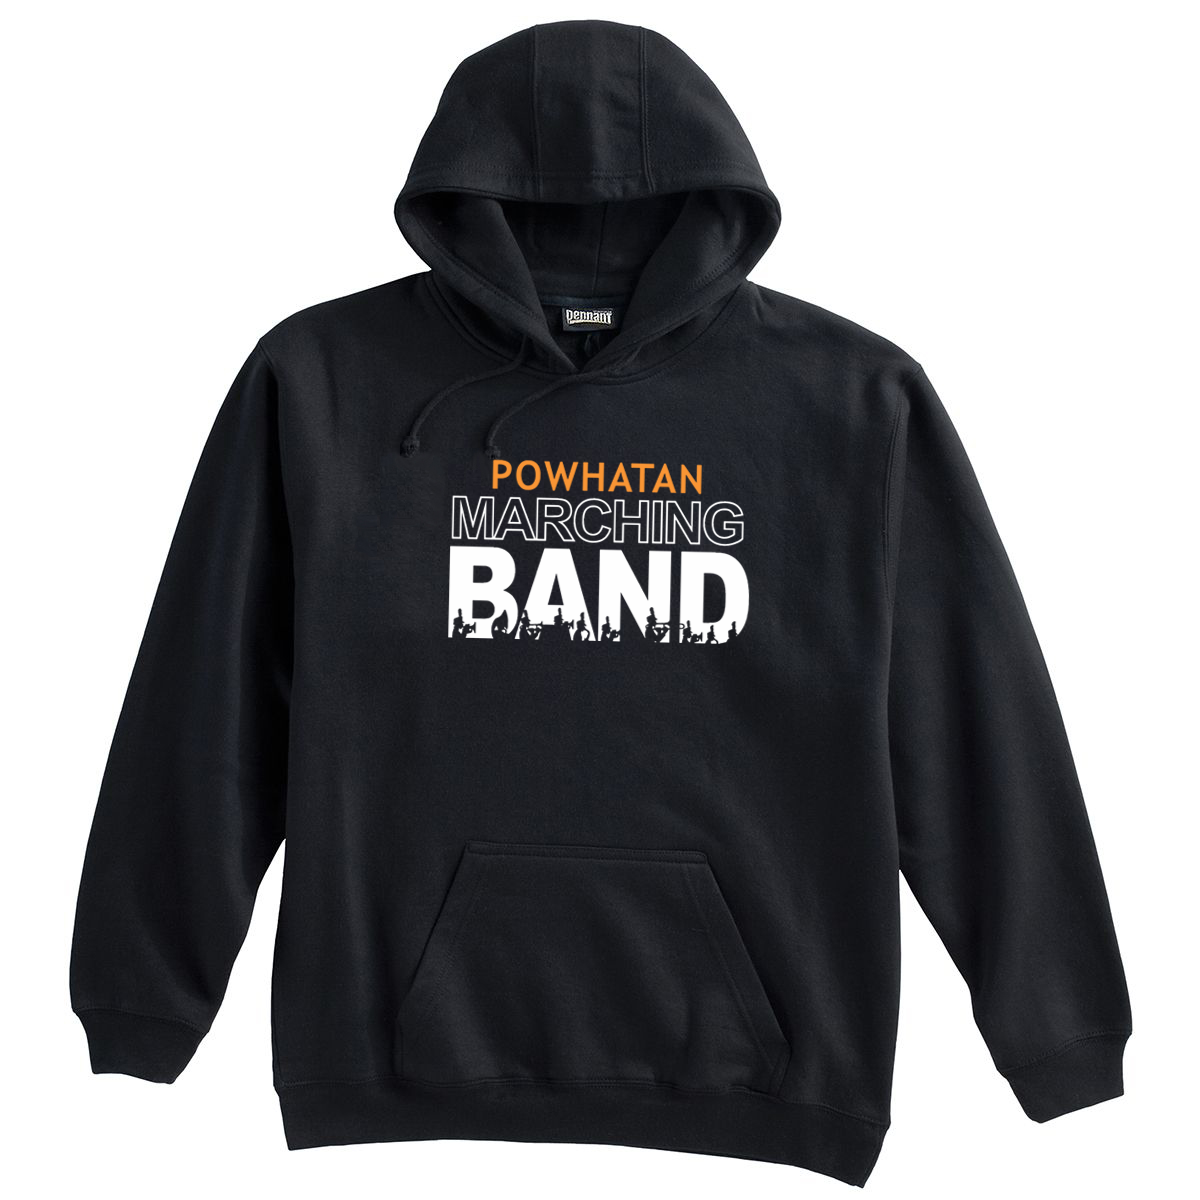 Powhatan Marching Band Sweatshirt